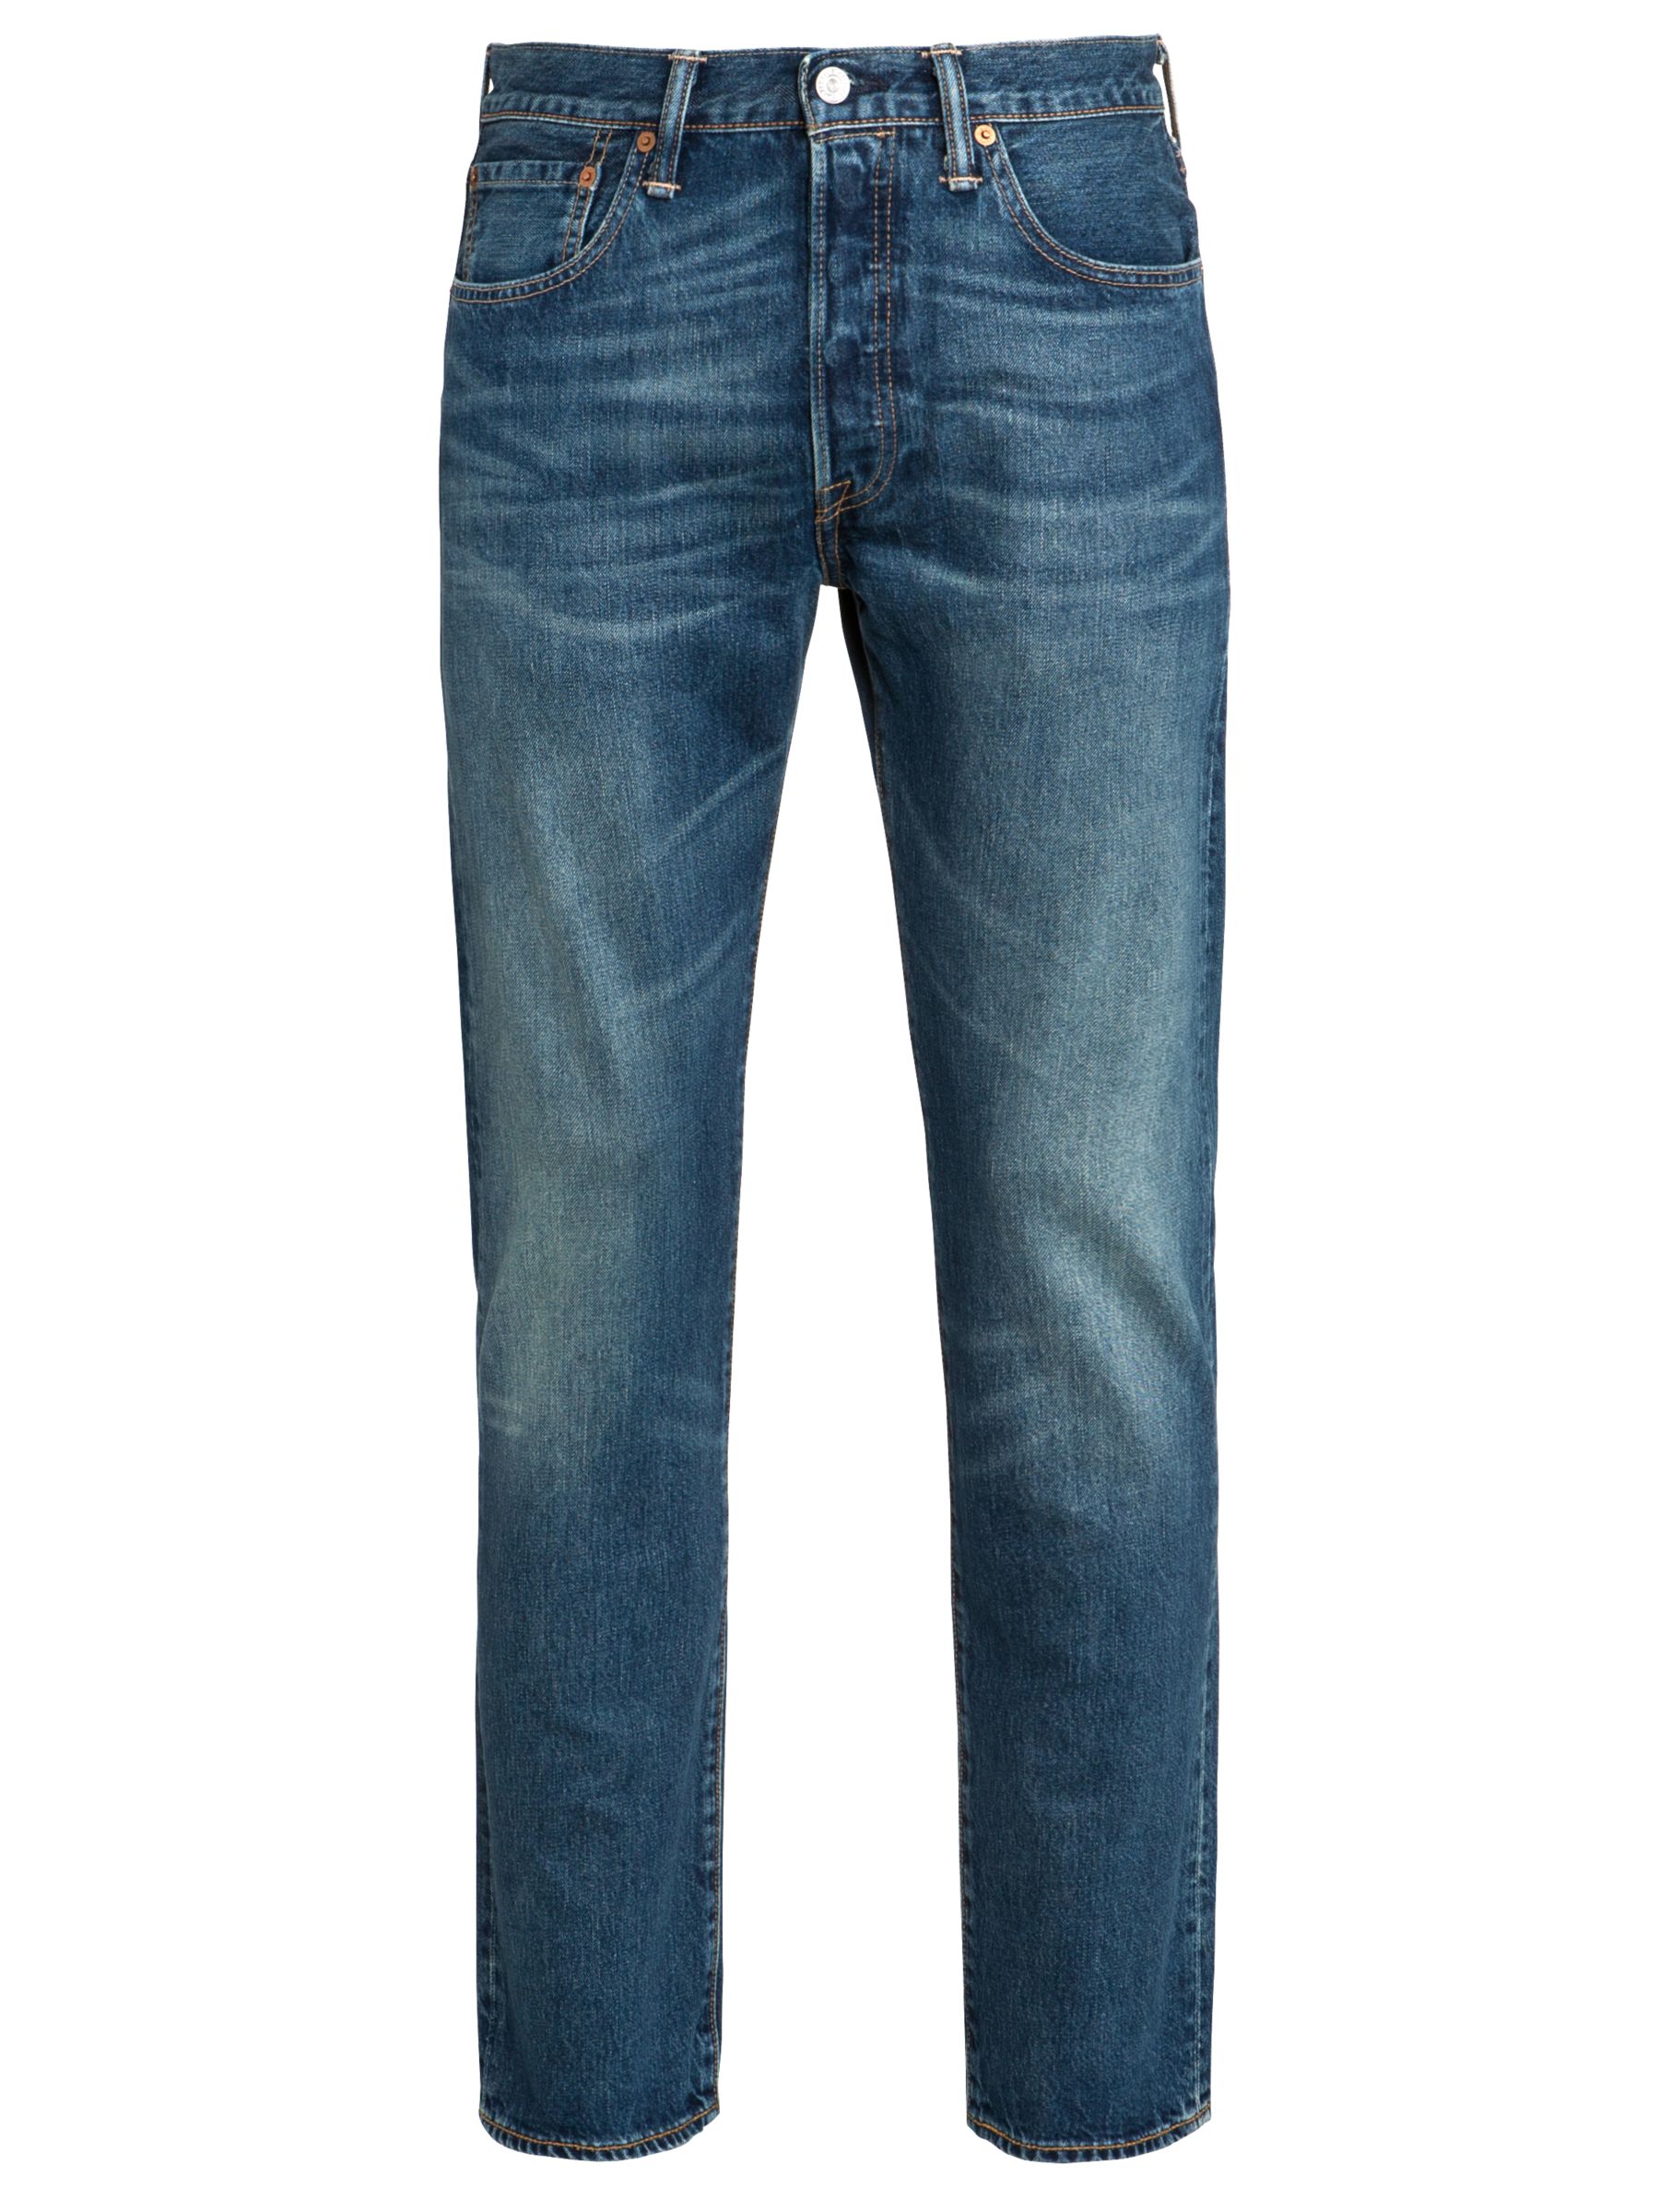 Levi's 501 Original Straight Jeans, Hook